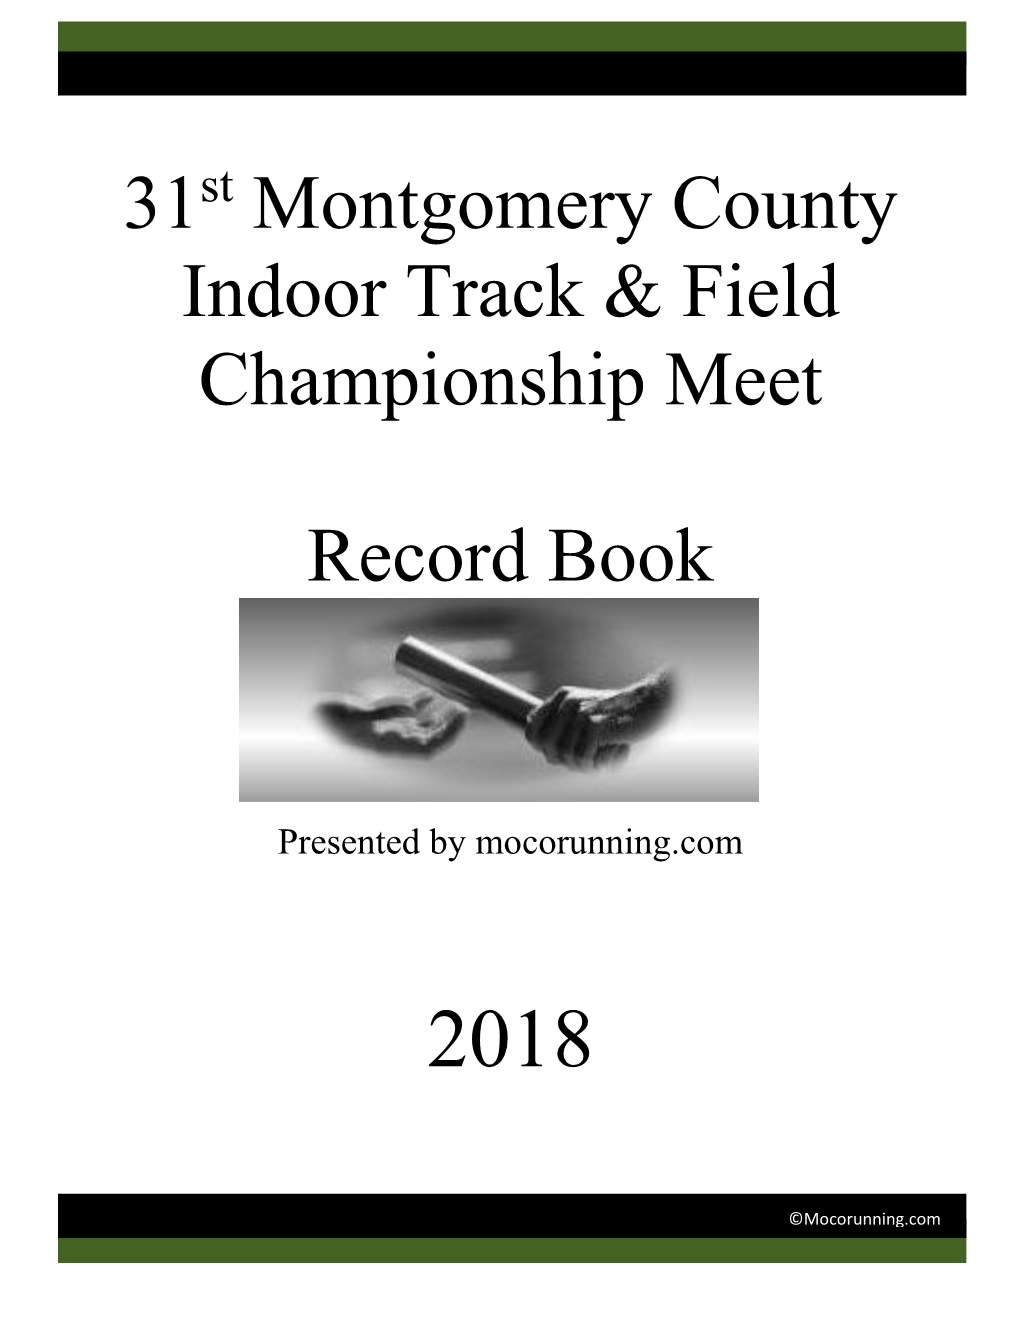 31 Montgomery County Indoor Track & Field Championship Meet Record